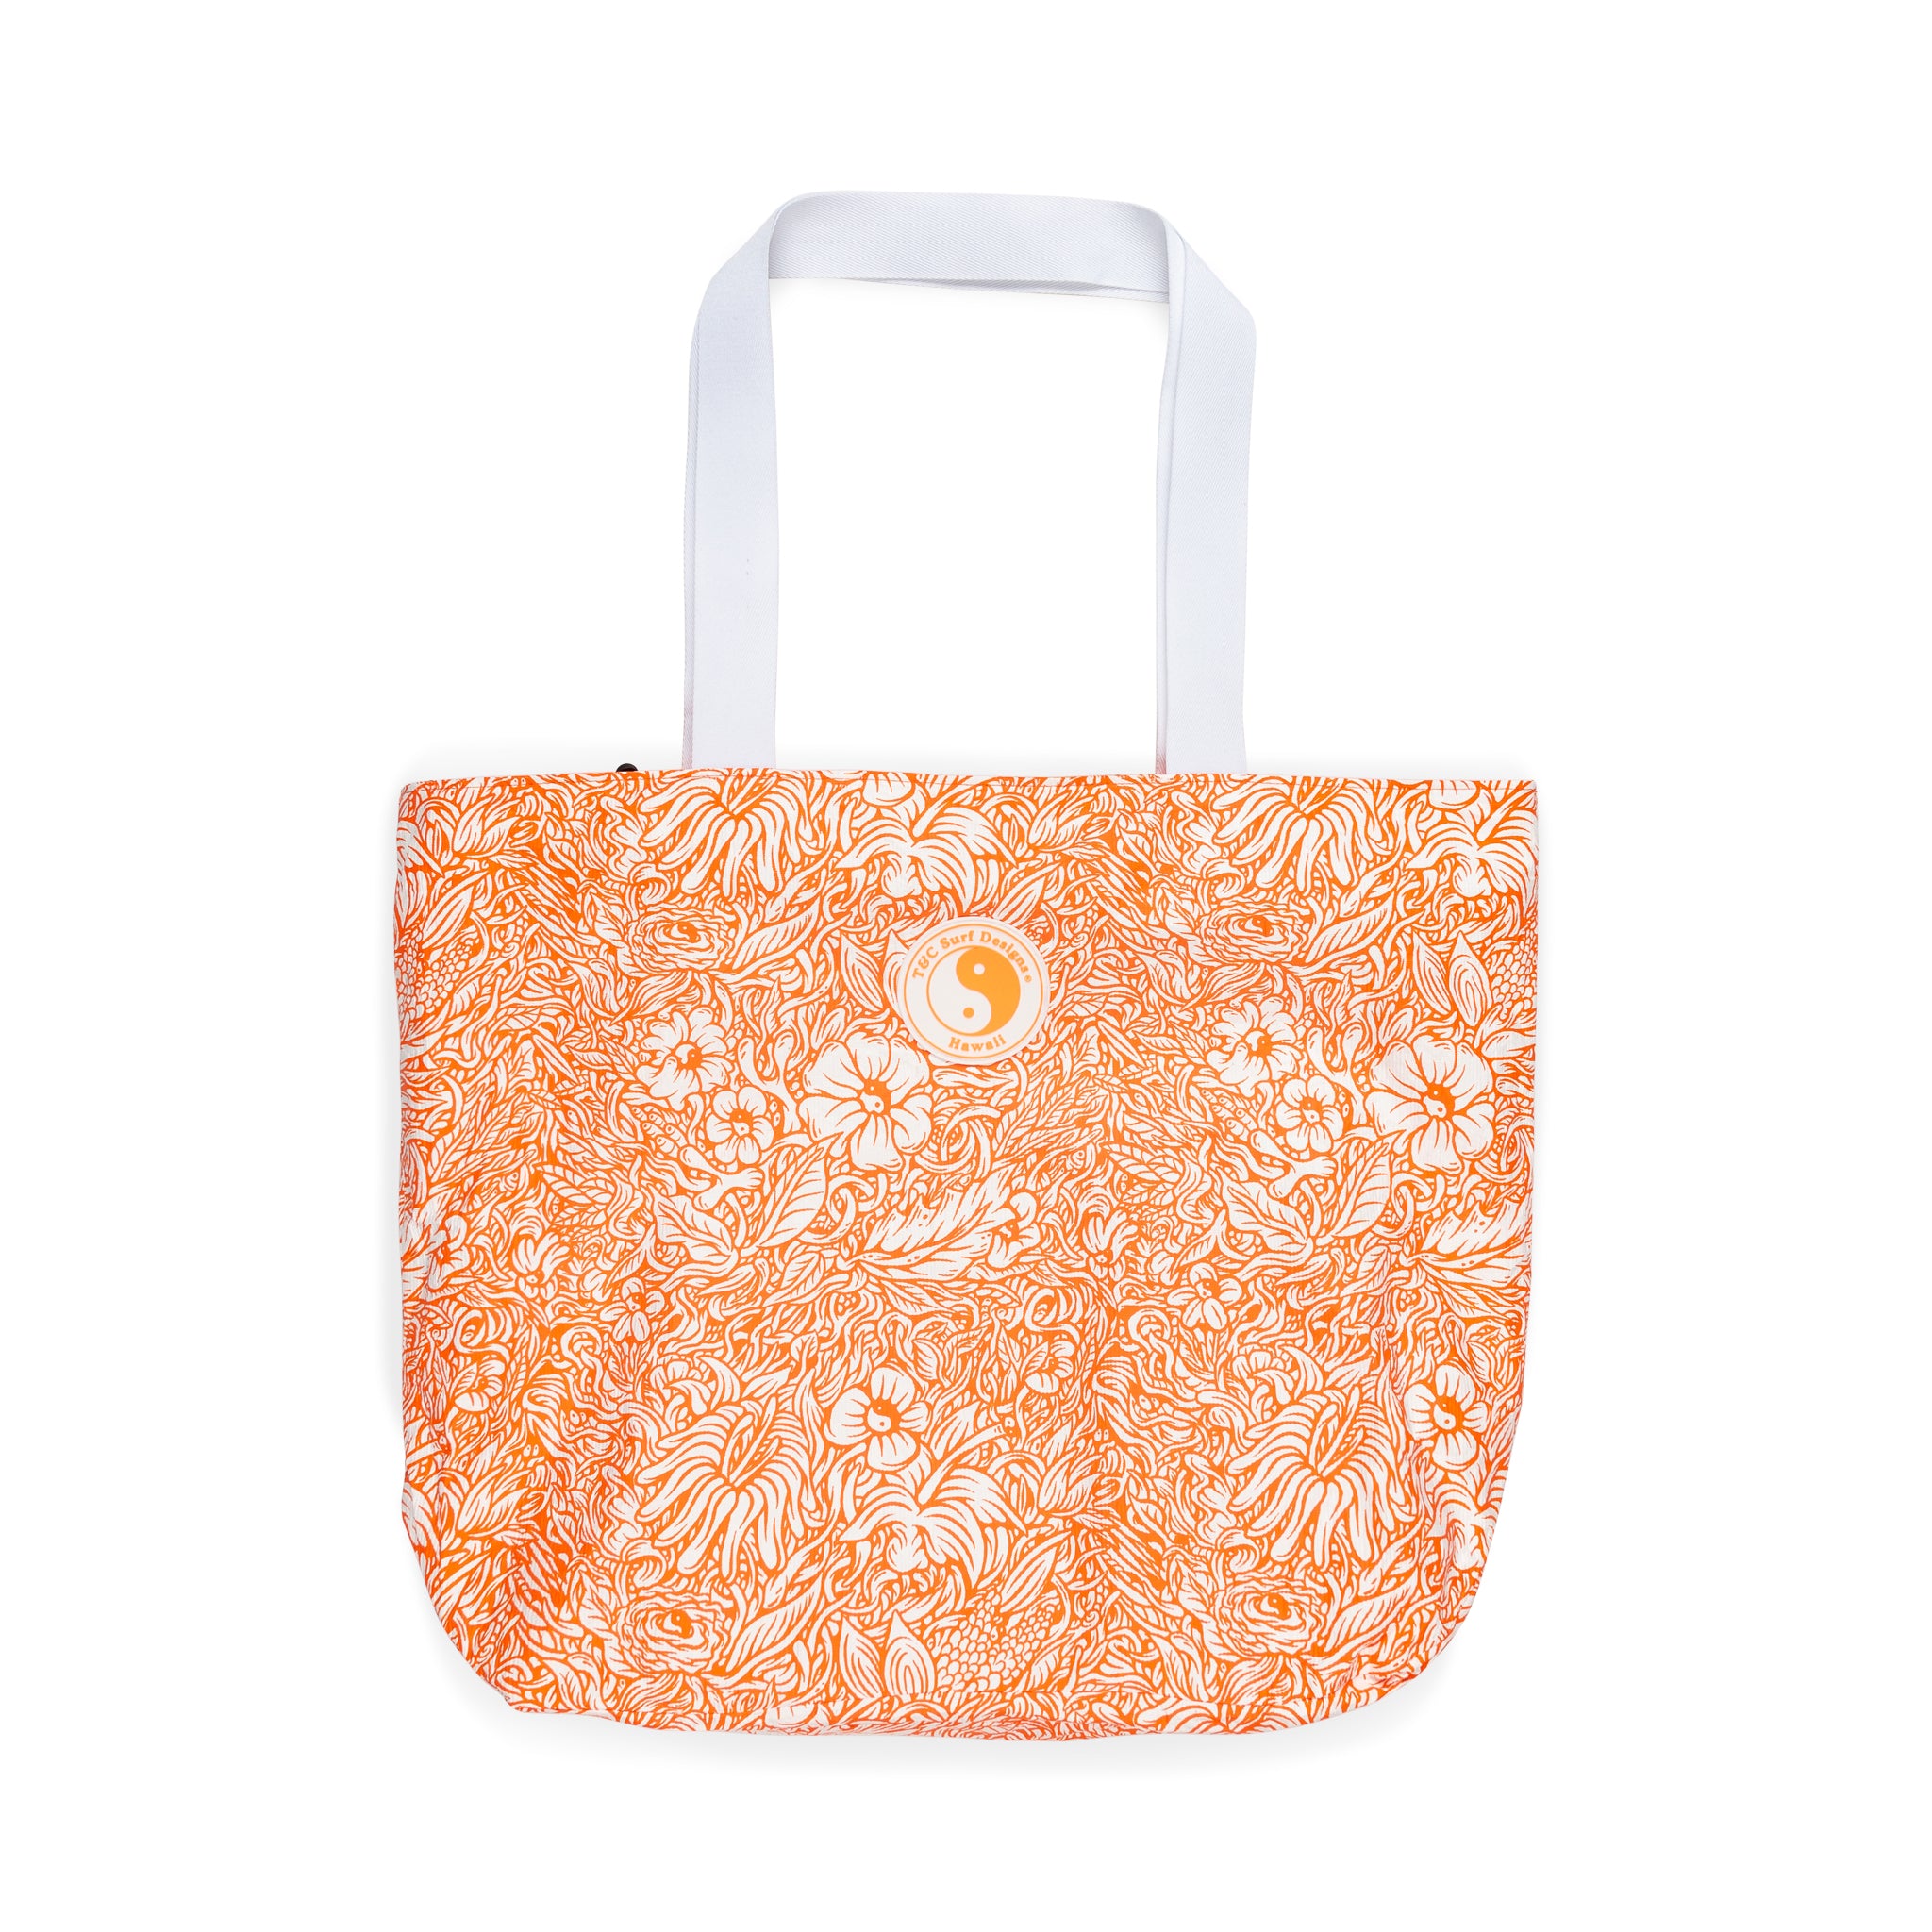 T&C Surf Designs Printed Travel Tote Bag- Orange Flower